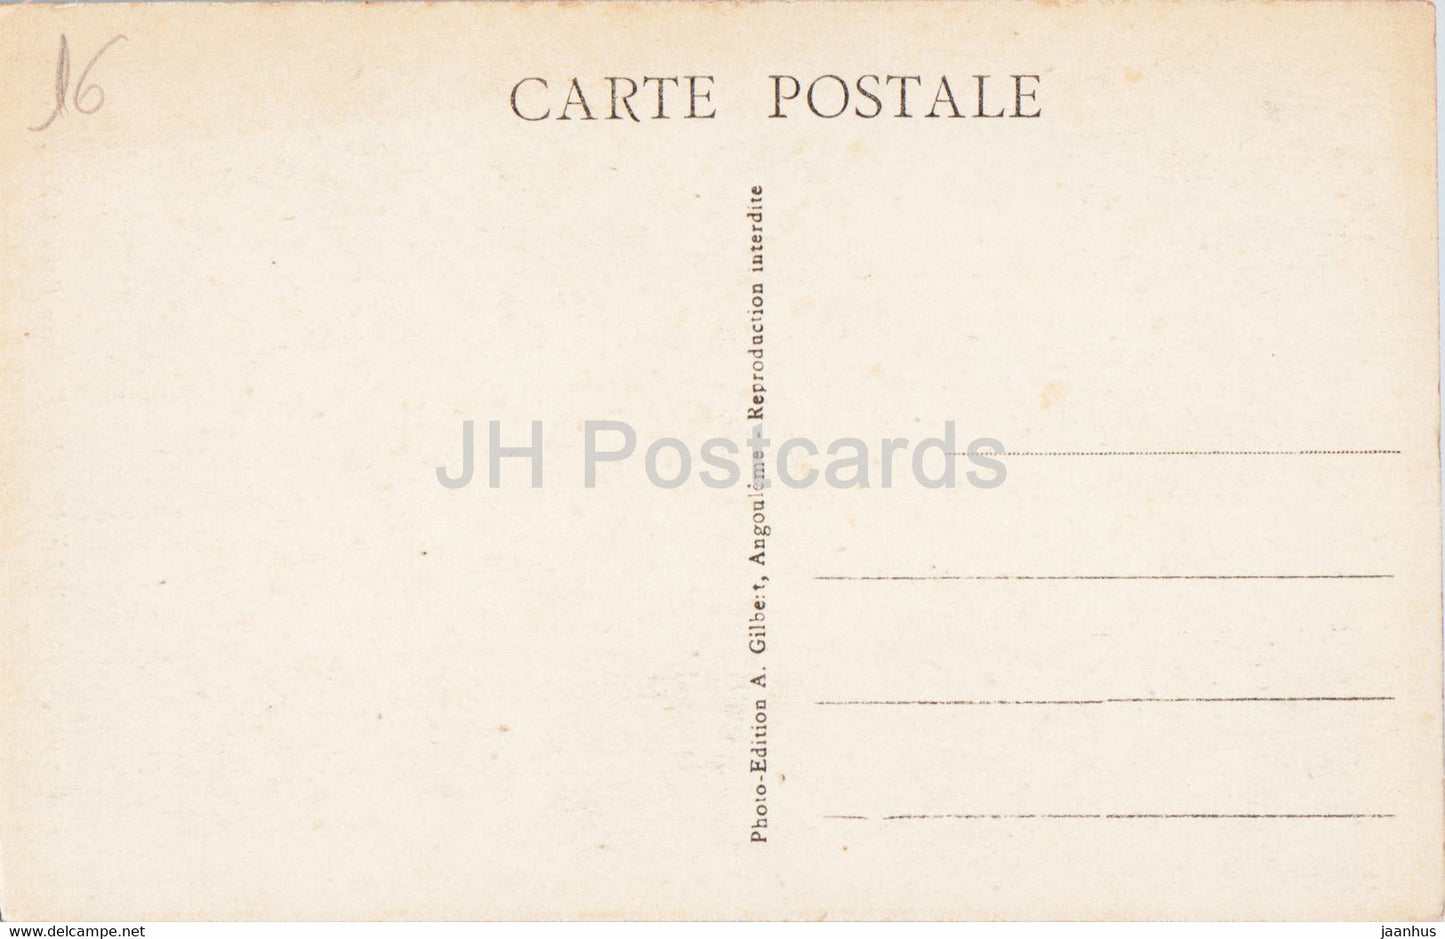 Angoulême - Rue Vauban - 930 - carte postale ancienne - France - inutilisée